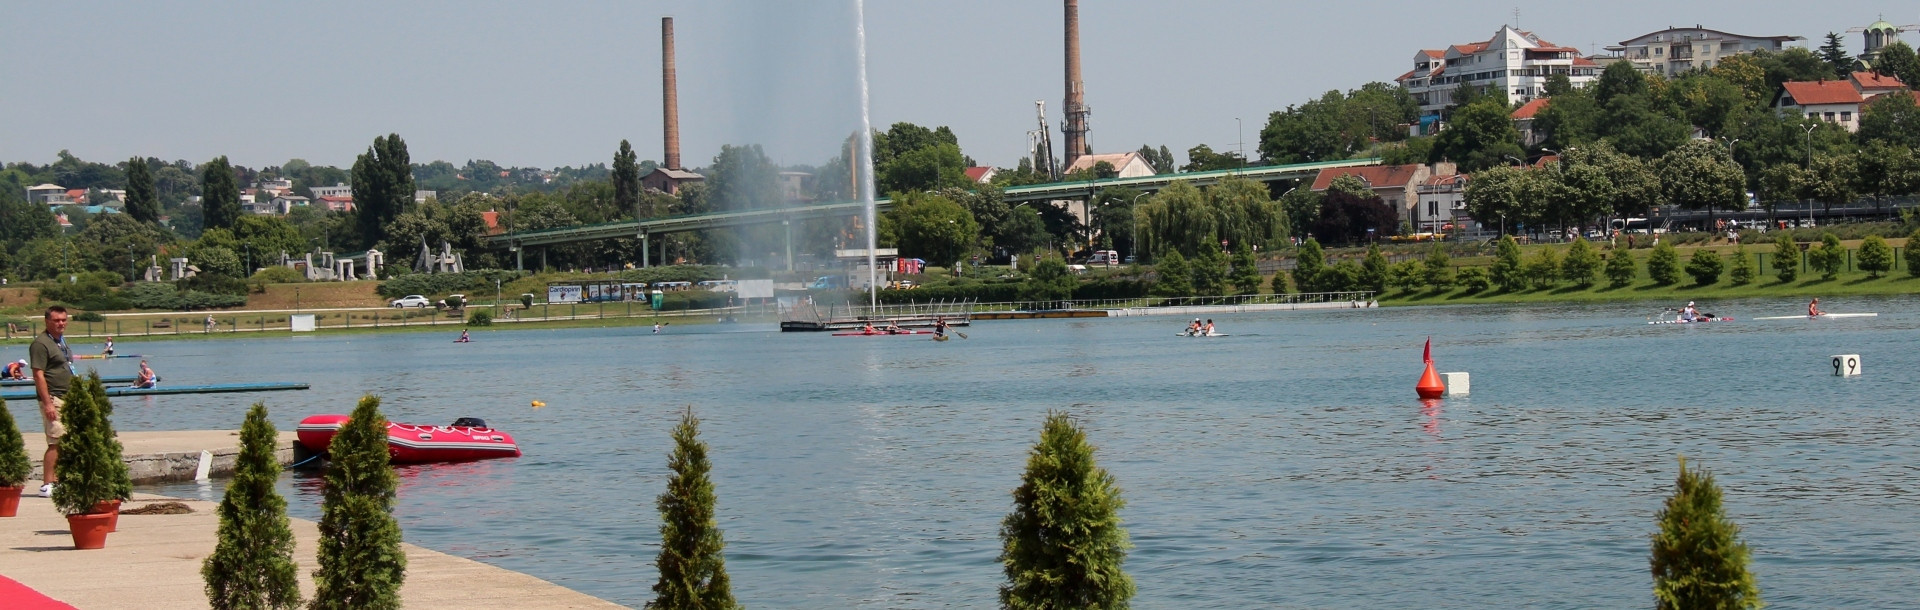 Belgrade is hosting the European Canoe Sprint Championships ©ICF